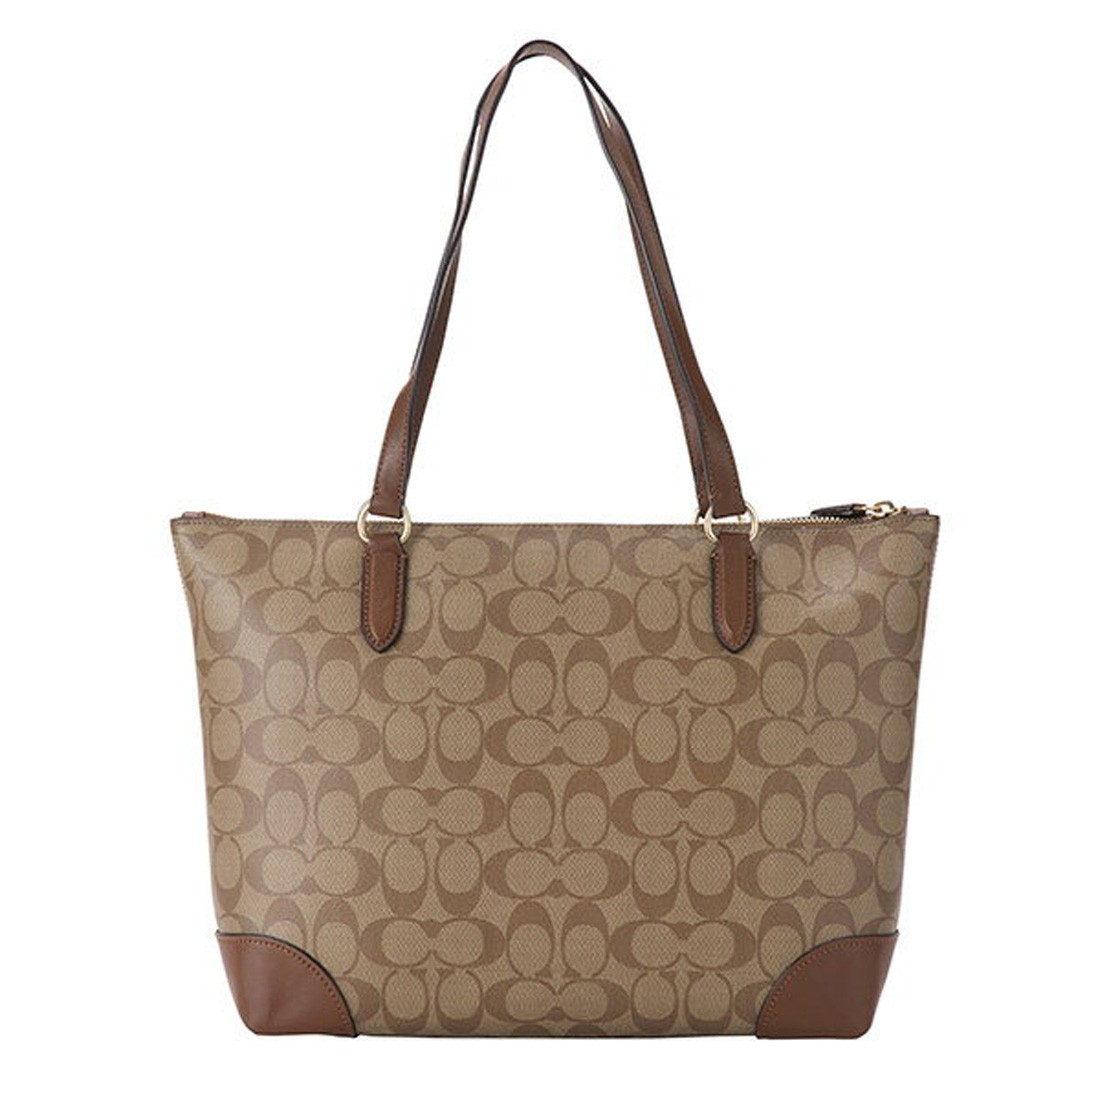 NWT COACH Zip Top Shoulder Signature Leather Handbag Purse Tote Bag Brown White | eBay